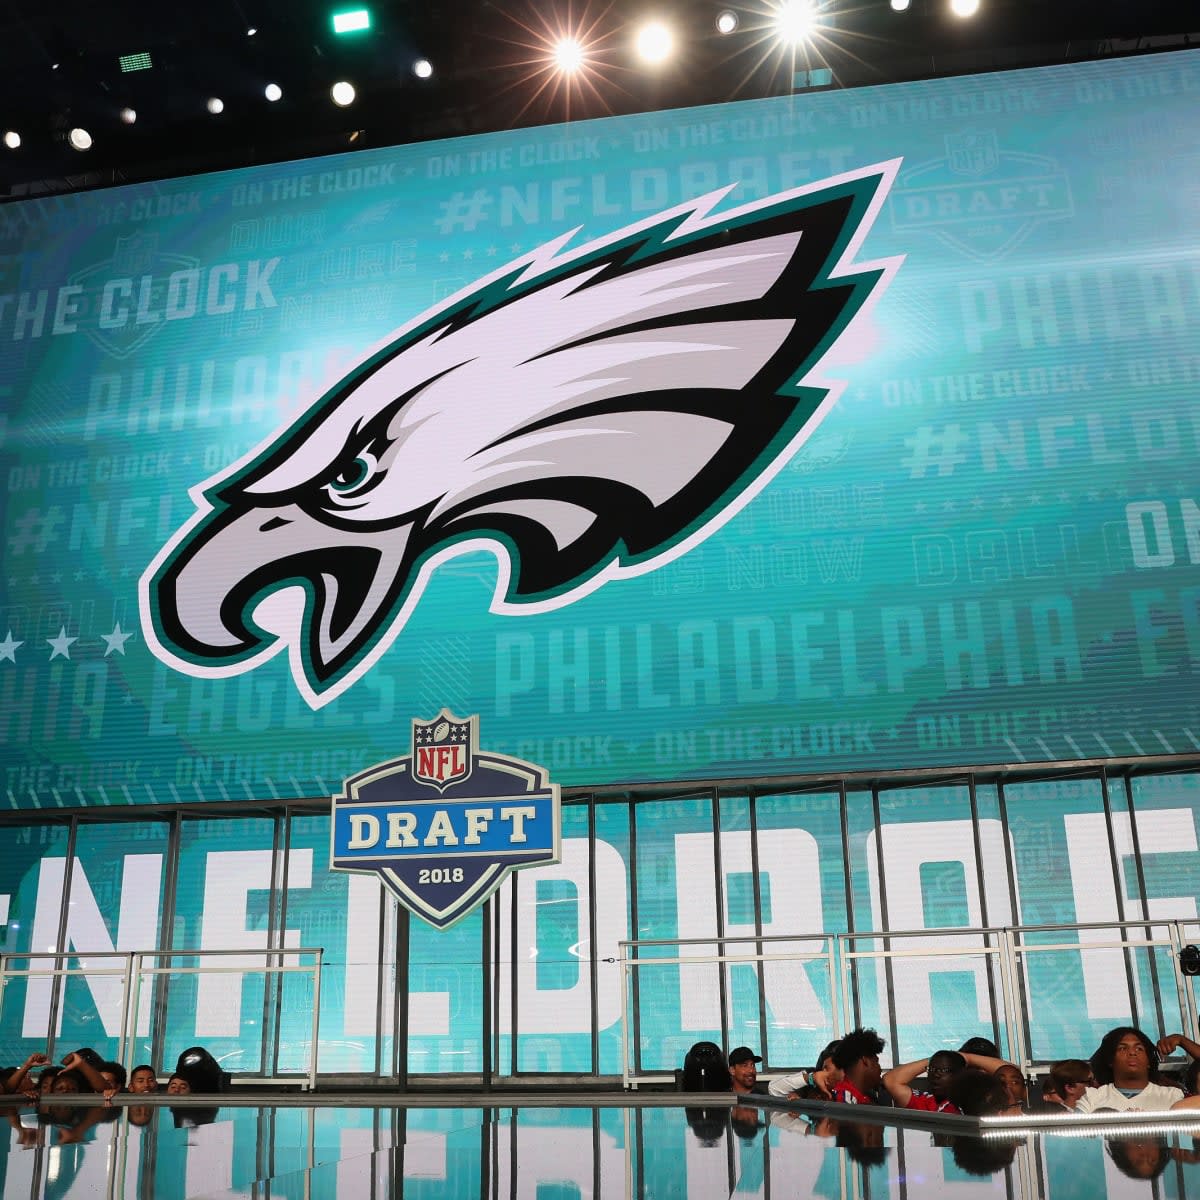 latest eagles mock draft 2022